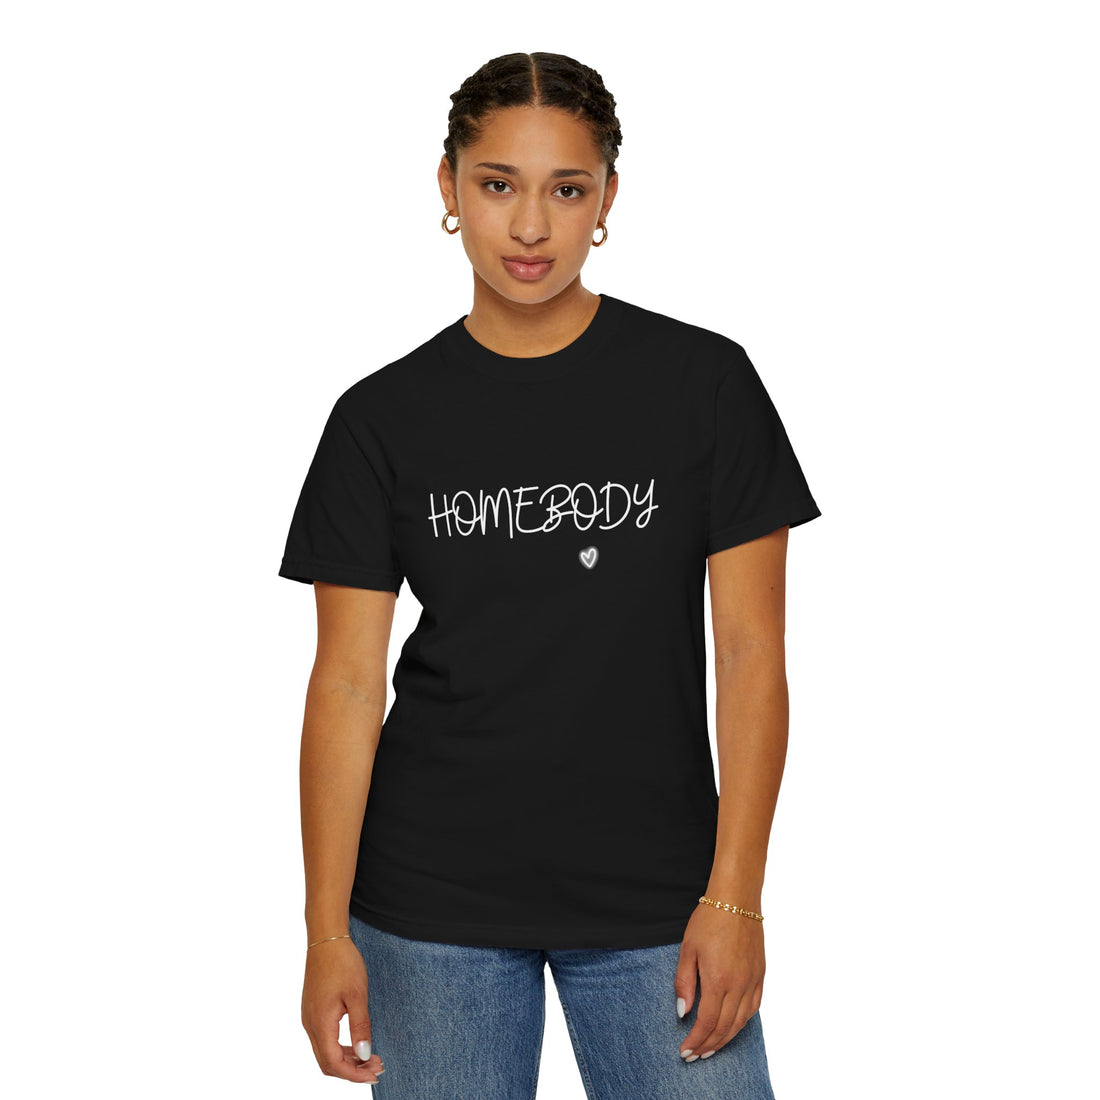 HOMEBODY Unisex Garment-Dyed T-shirt